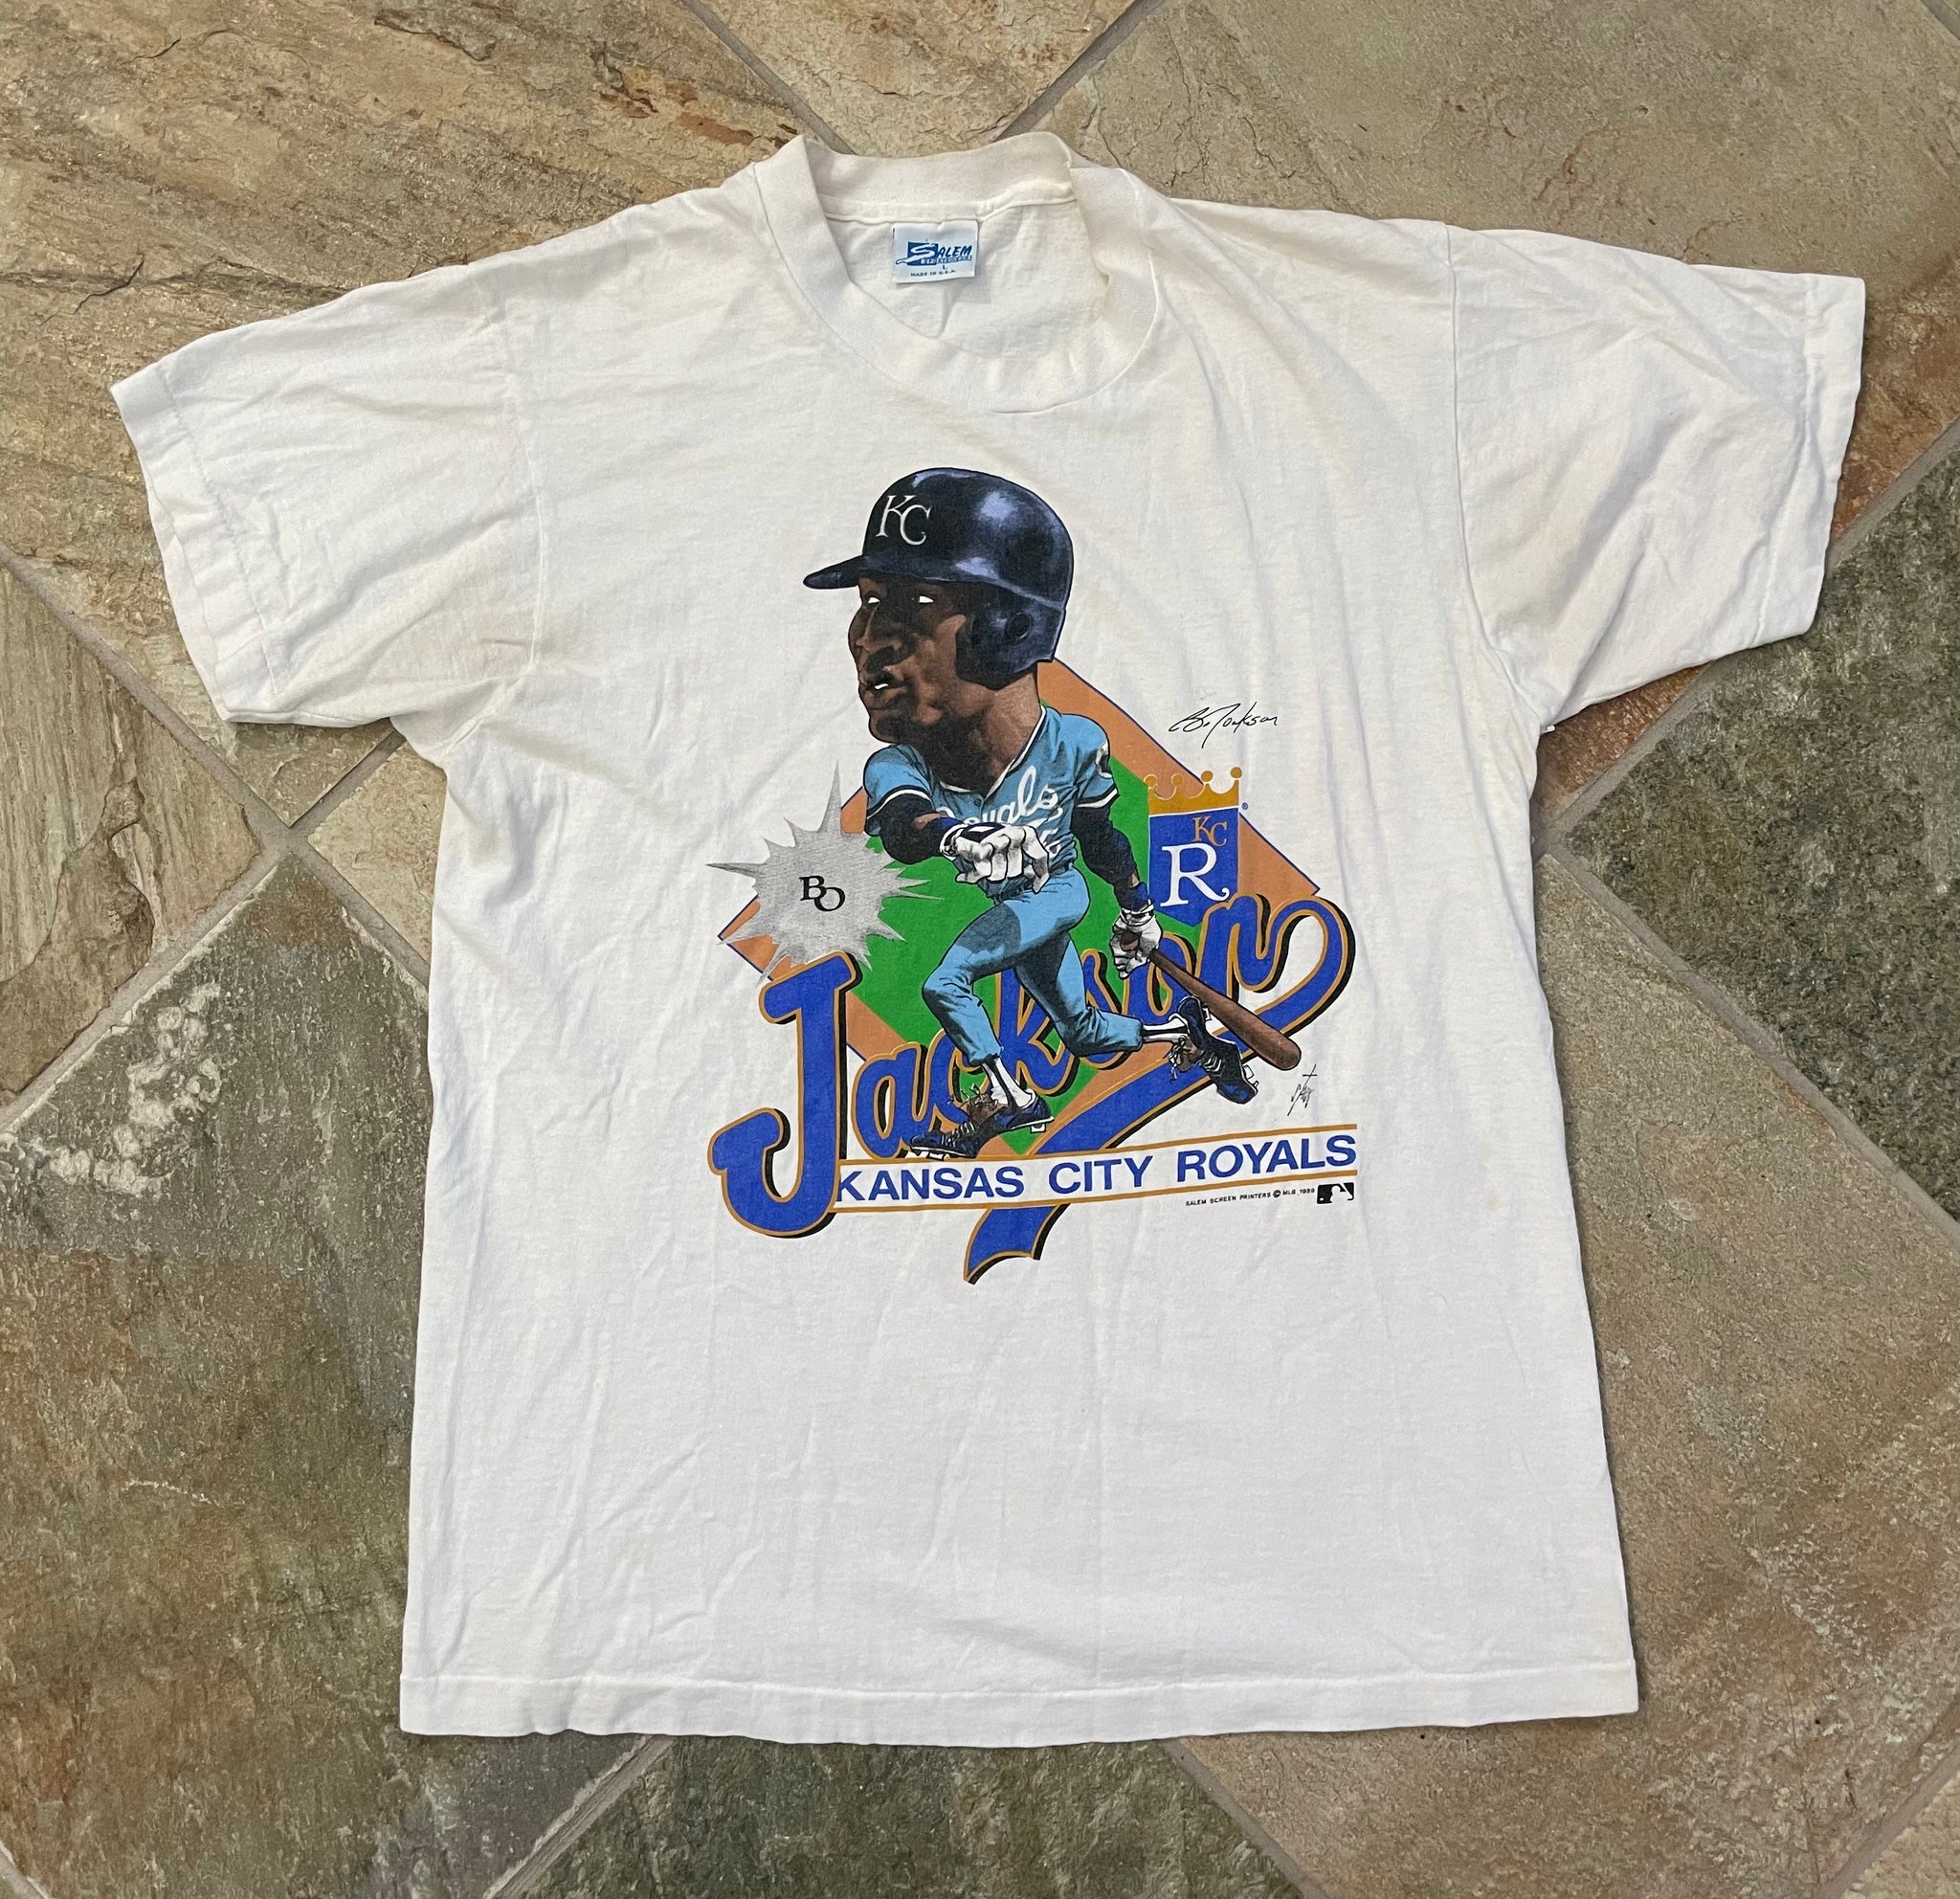 Vintage 1985 KANSAS CITY ROYALS World Series Champions T-Shirt